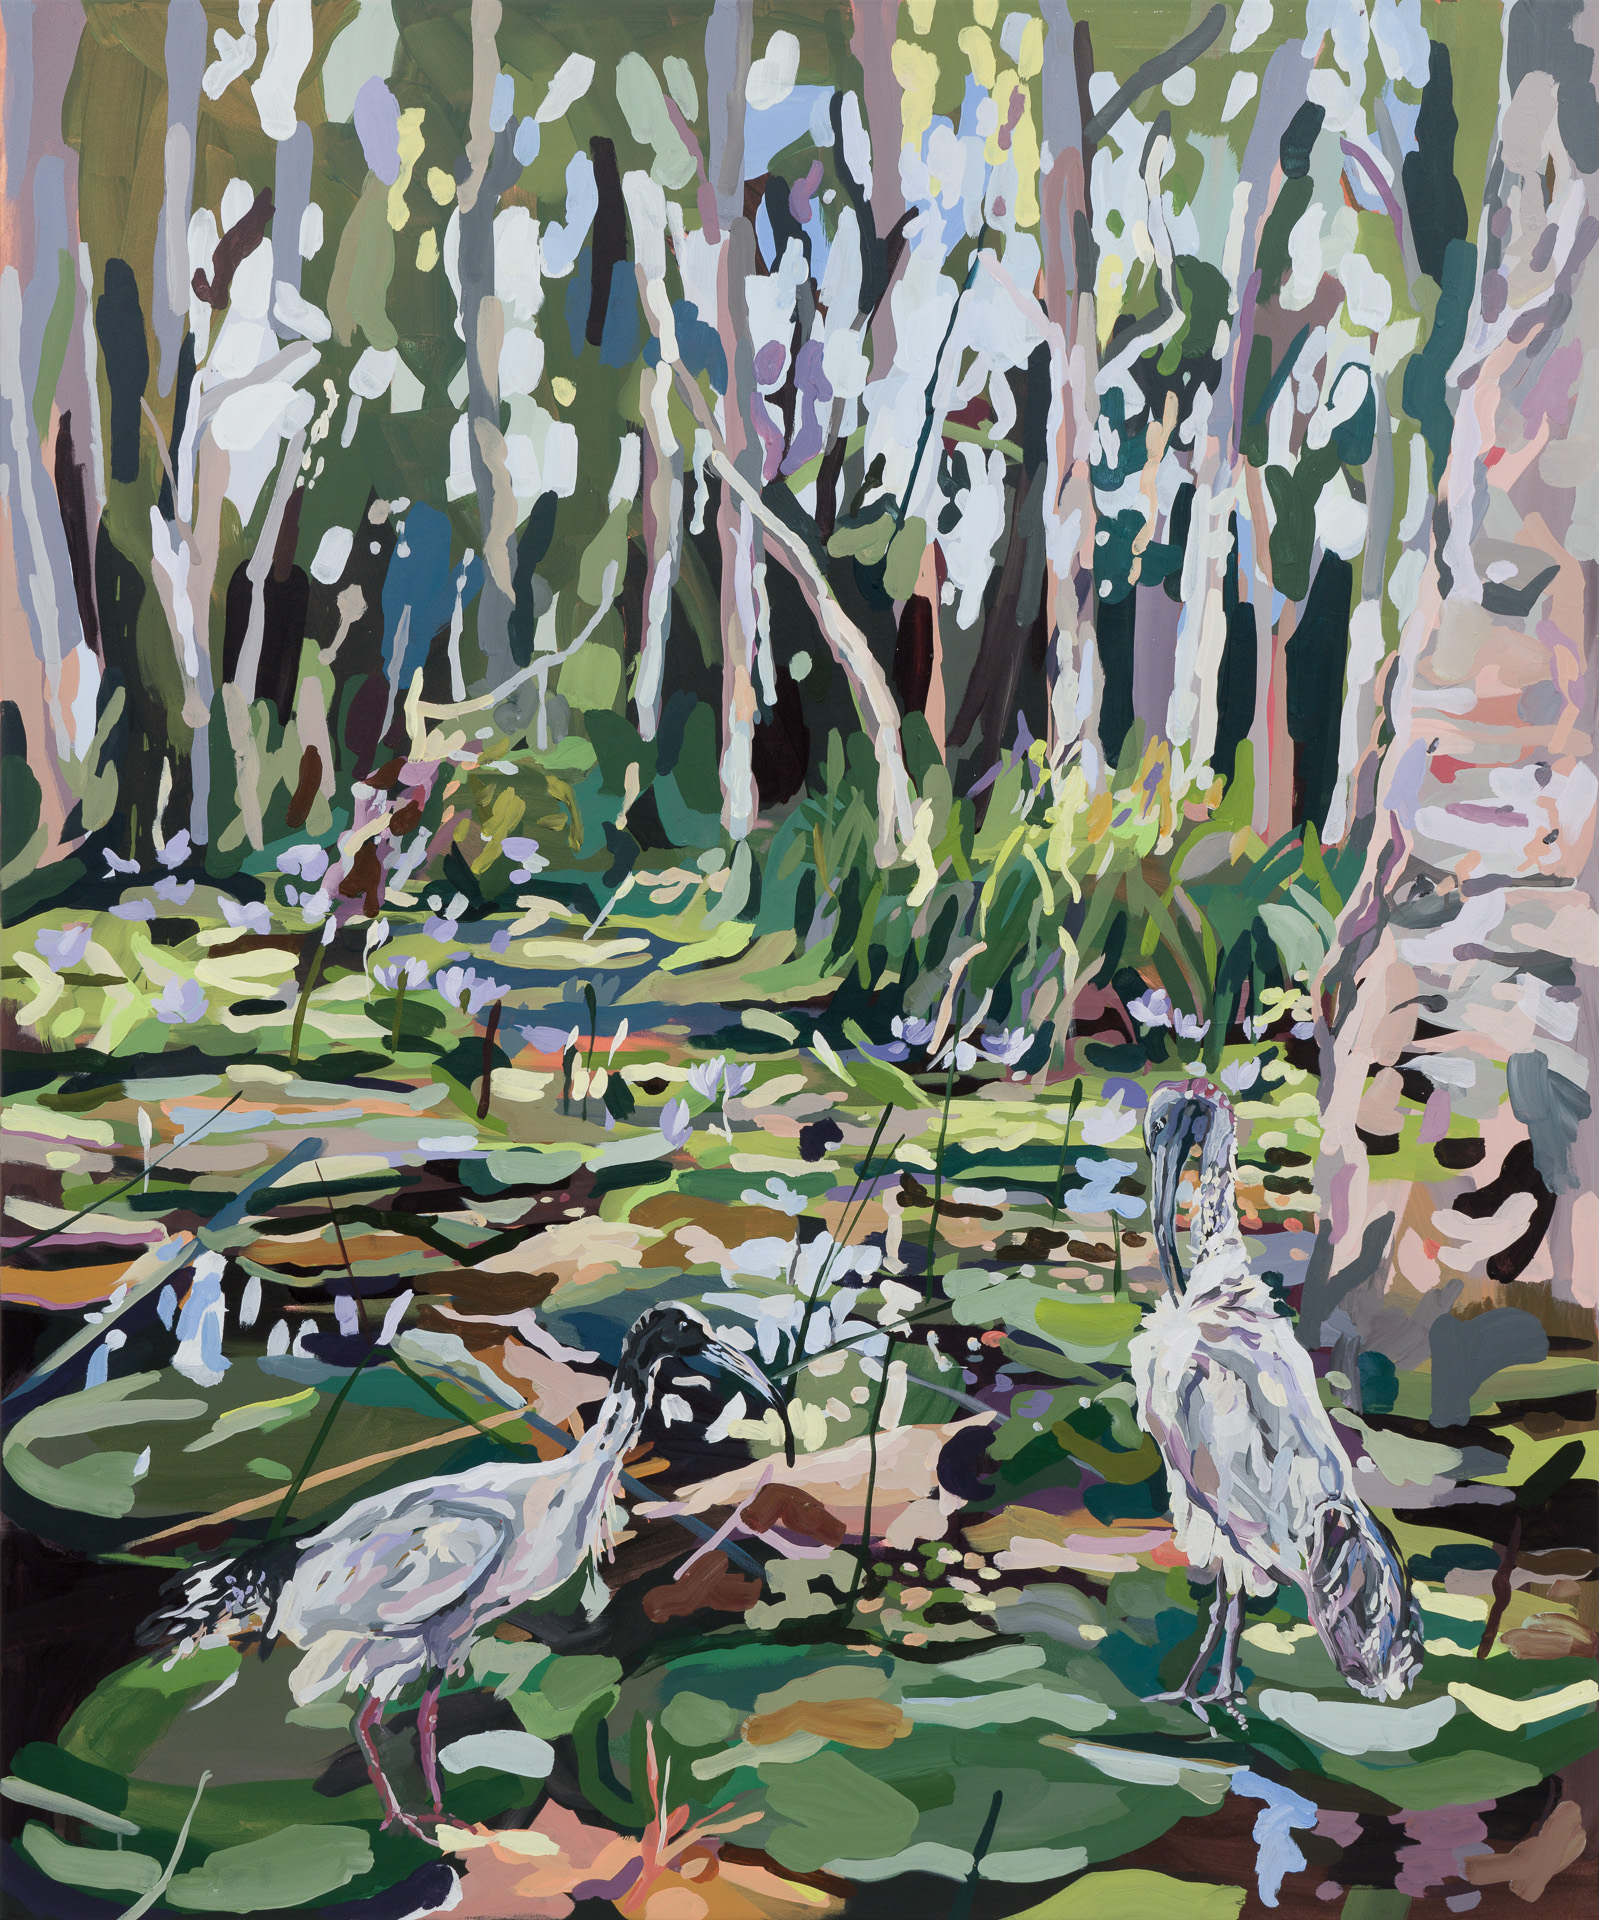 Ibis preening in the swamp